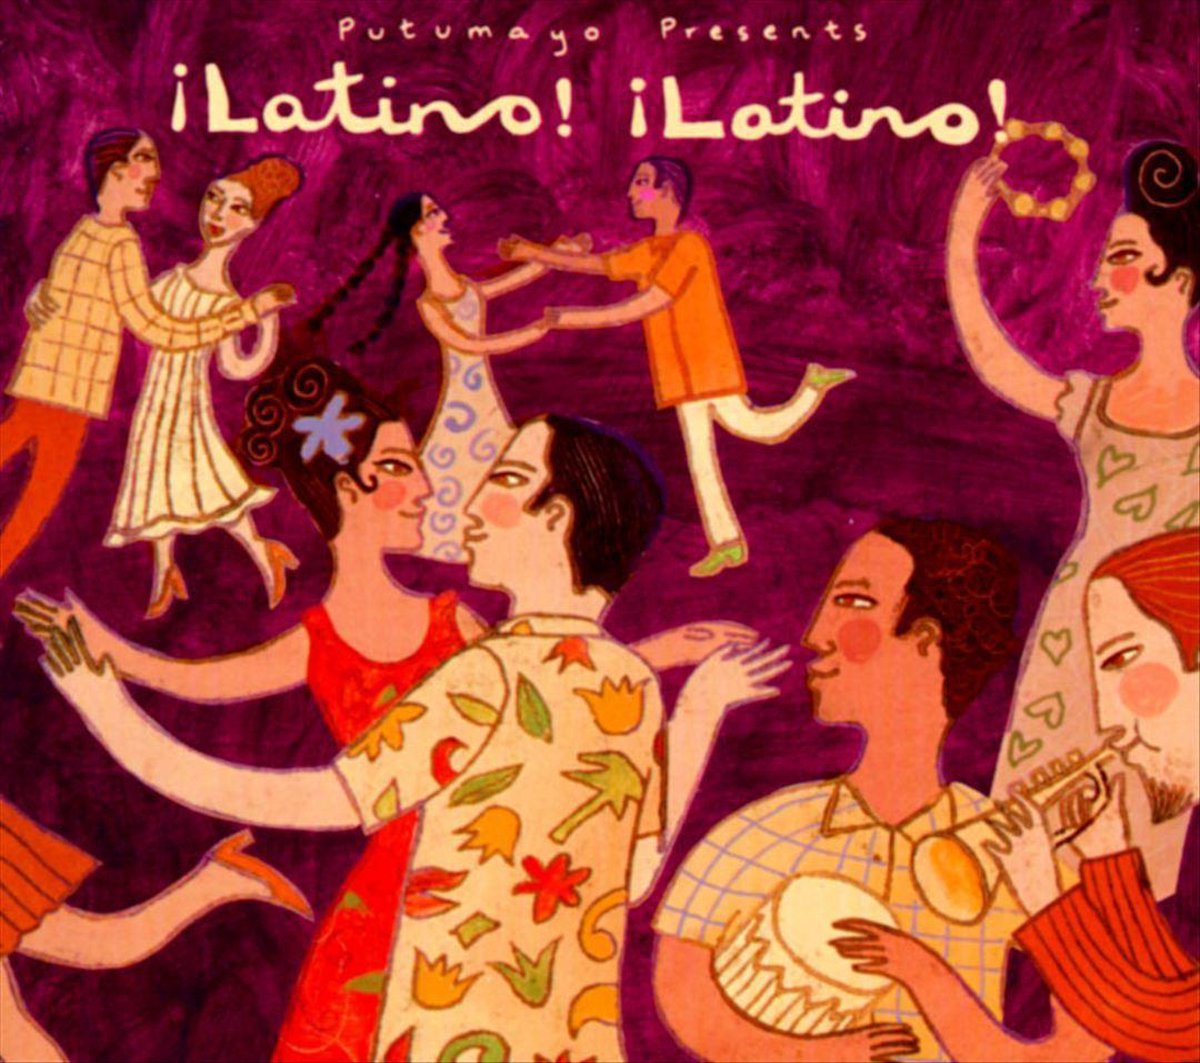 Latino! Latino! - various artists